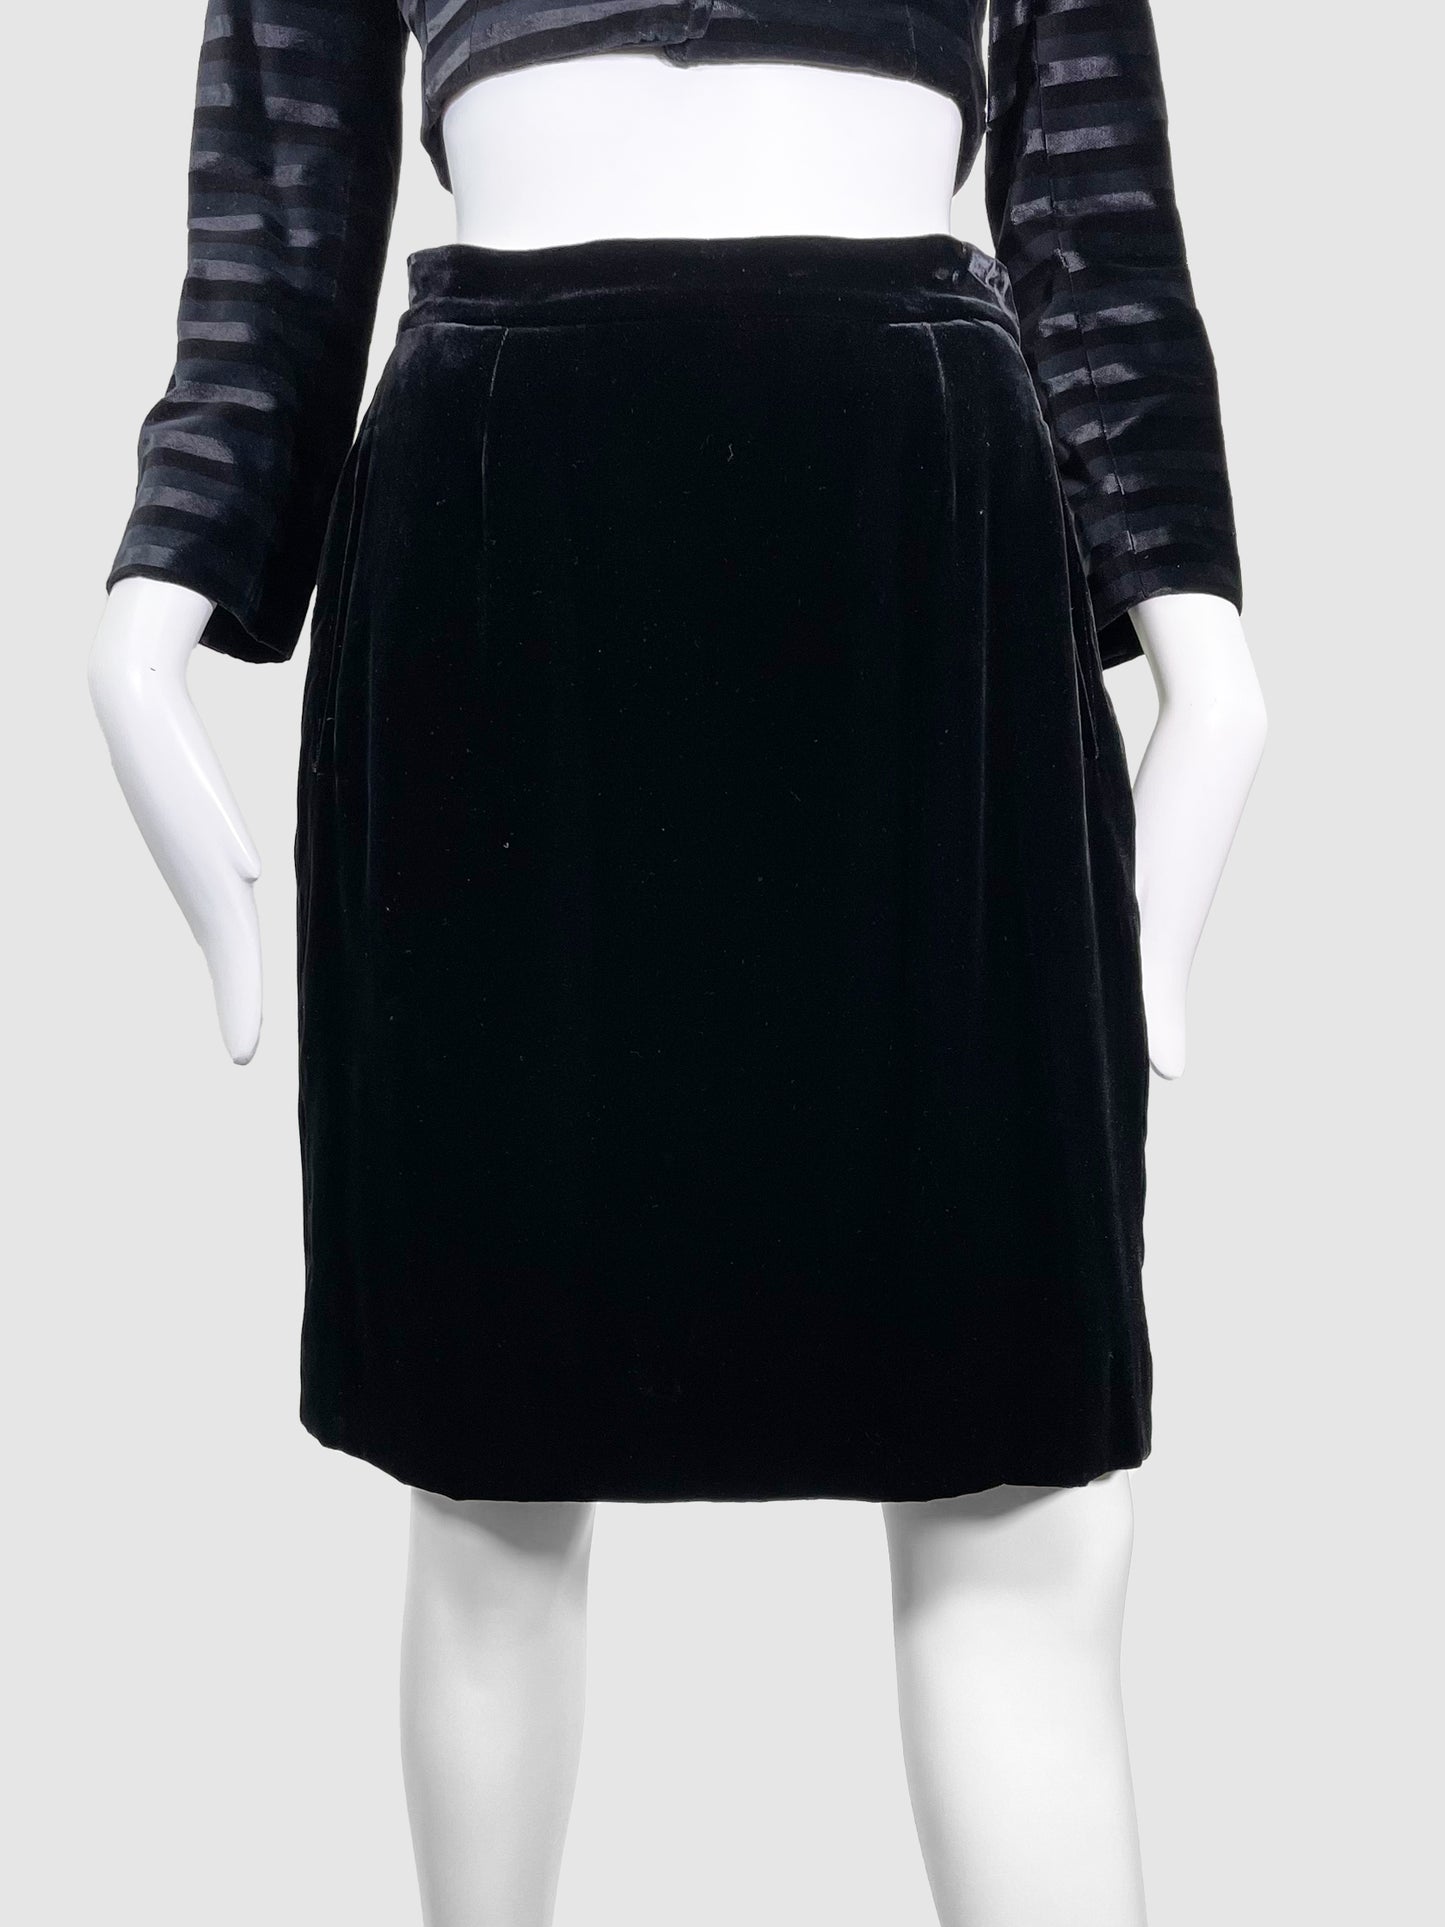 Giorgio Armani Velvet Skirt - Size 44